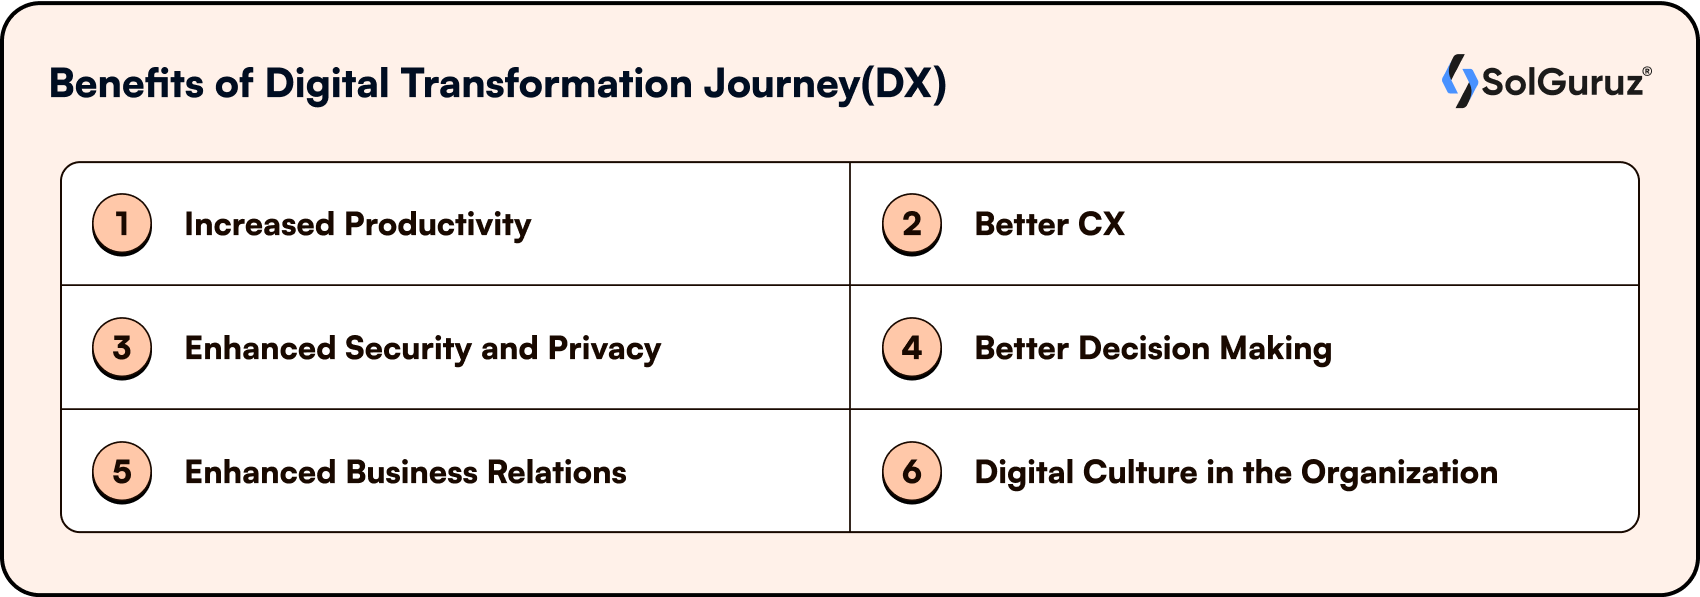 Benefits of Digital Transformation Journey(DX)